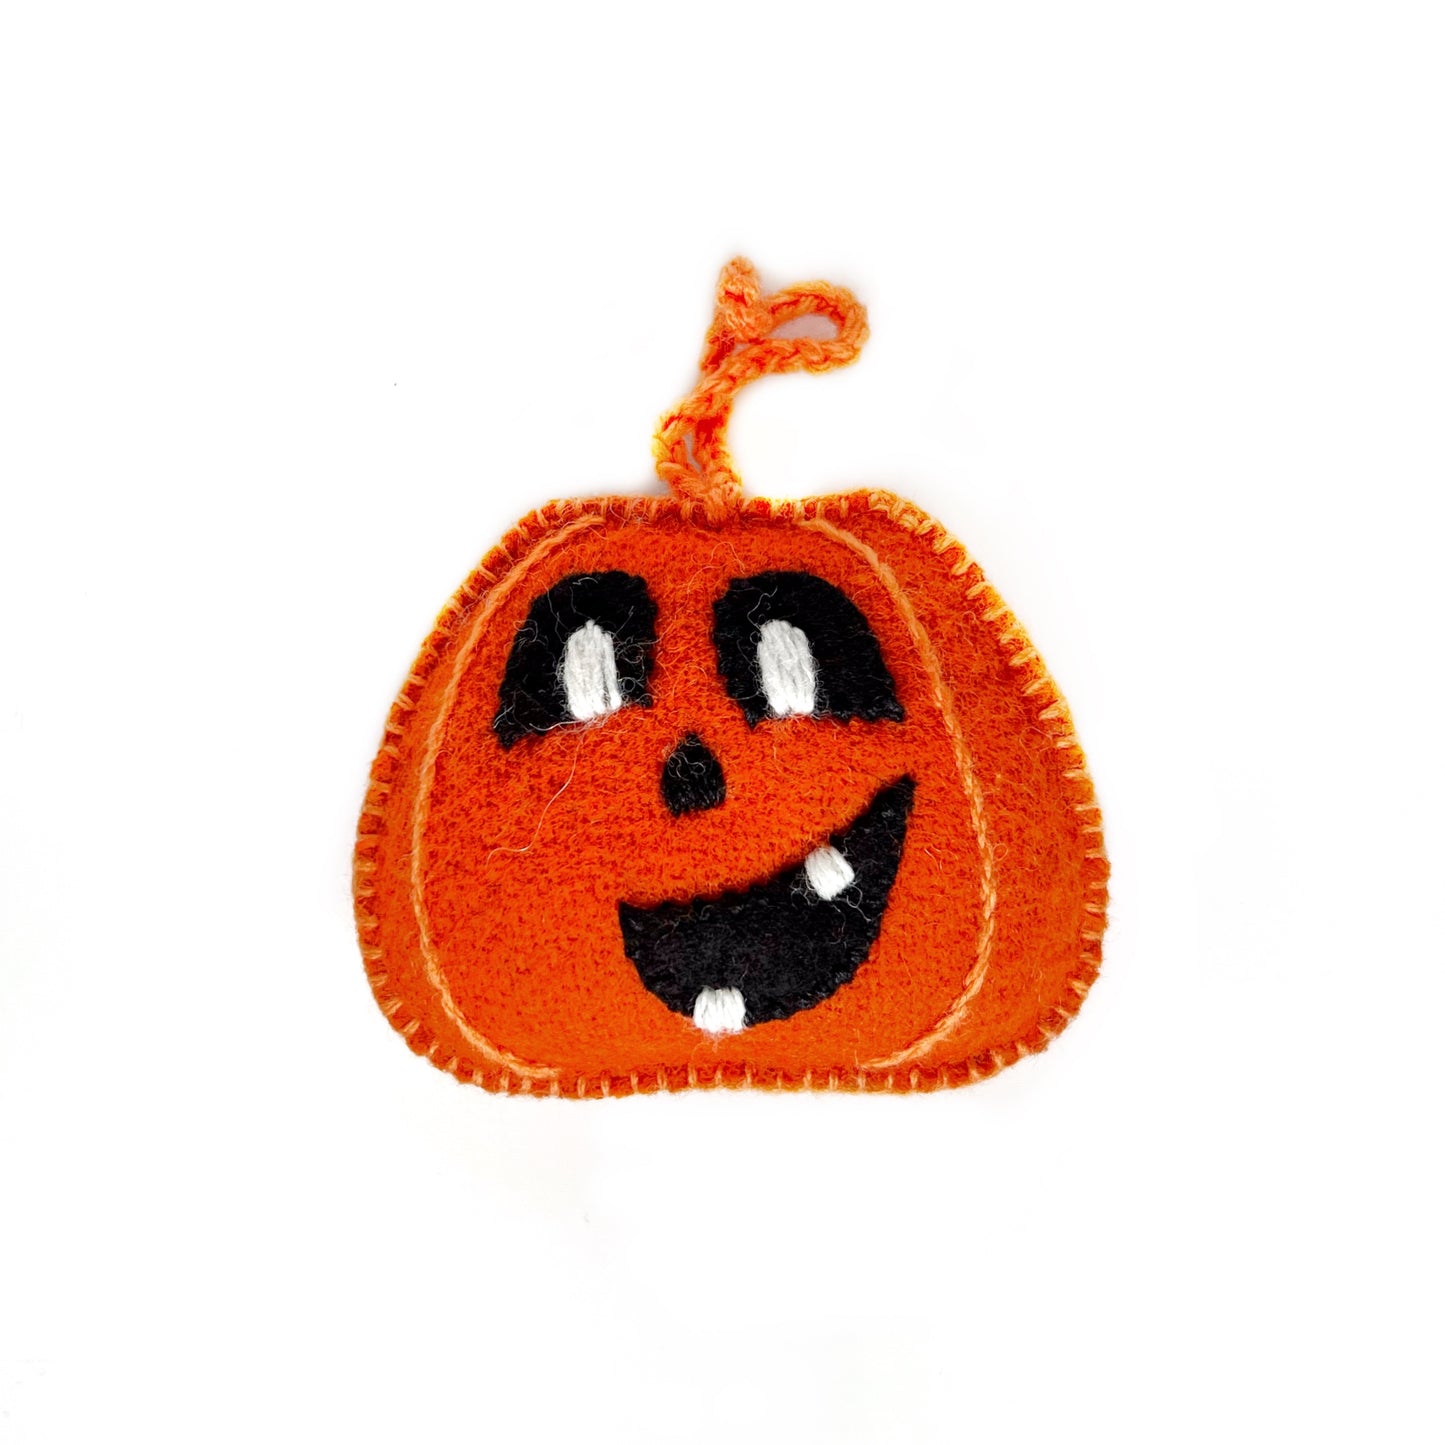 Colorful Halloween Ornament: Jack-o-lantern